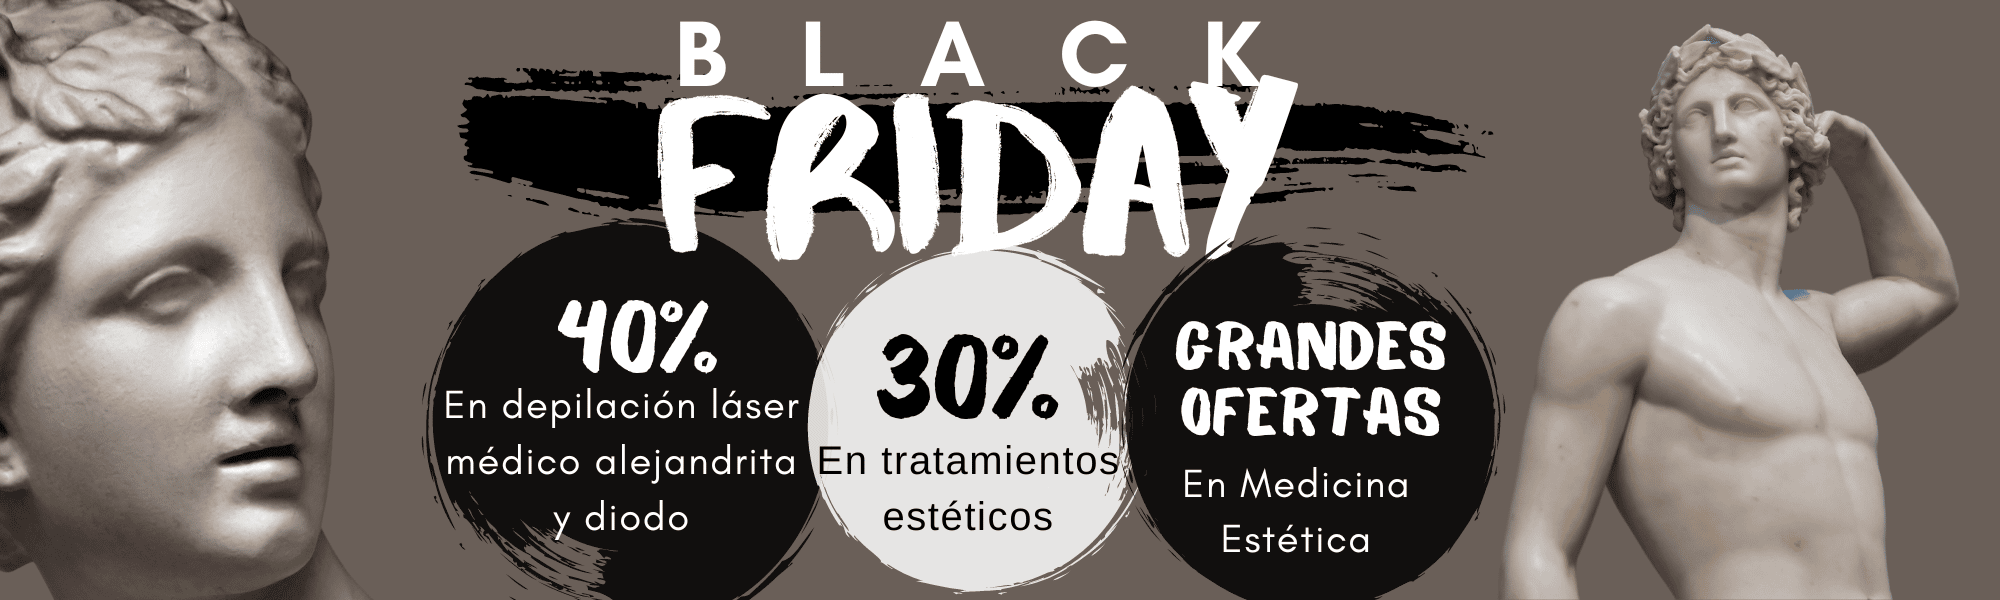 Ofertas Black Friday 40% depilación 30% Estética Ofertas en Medicina Estética